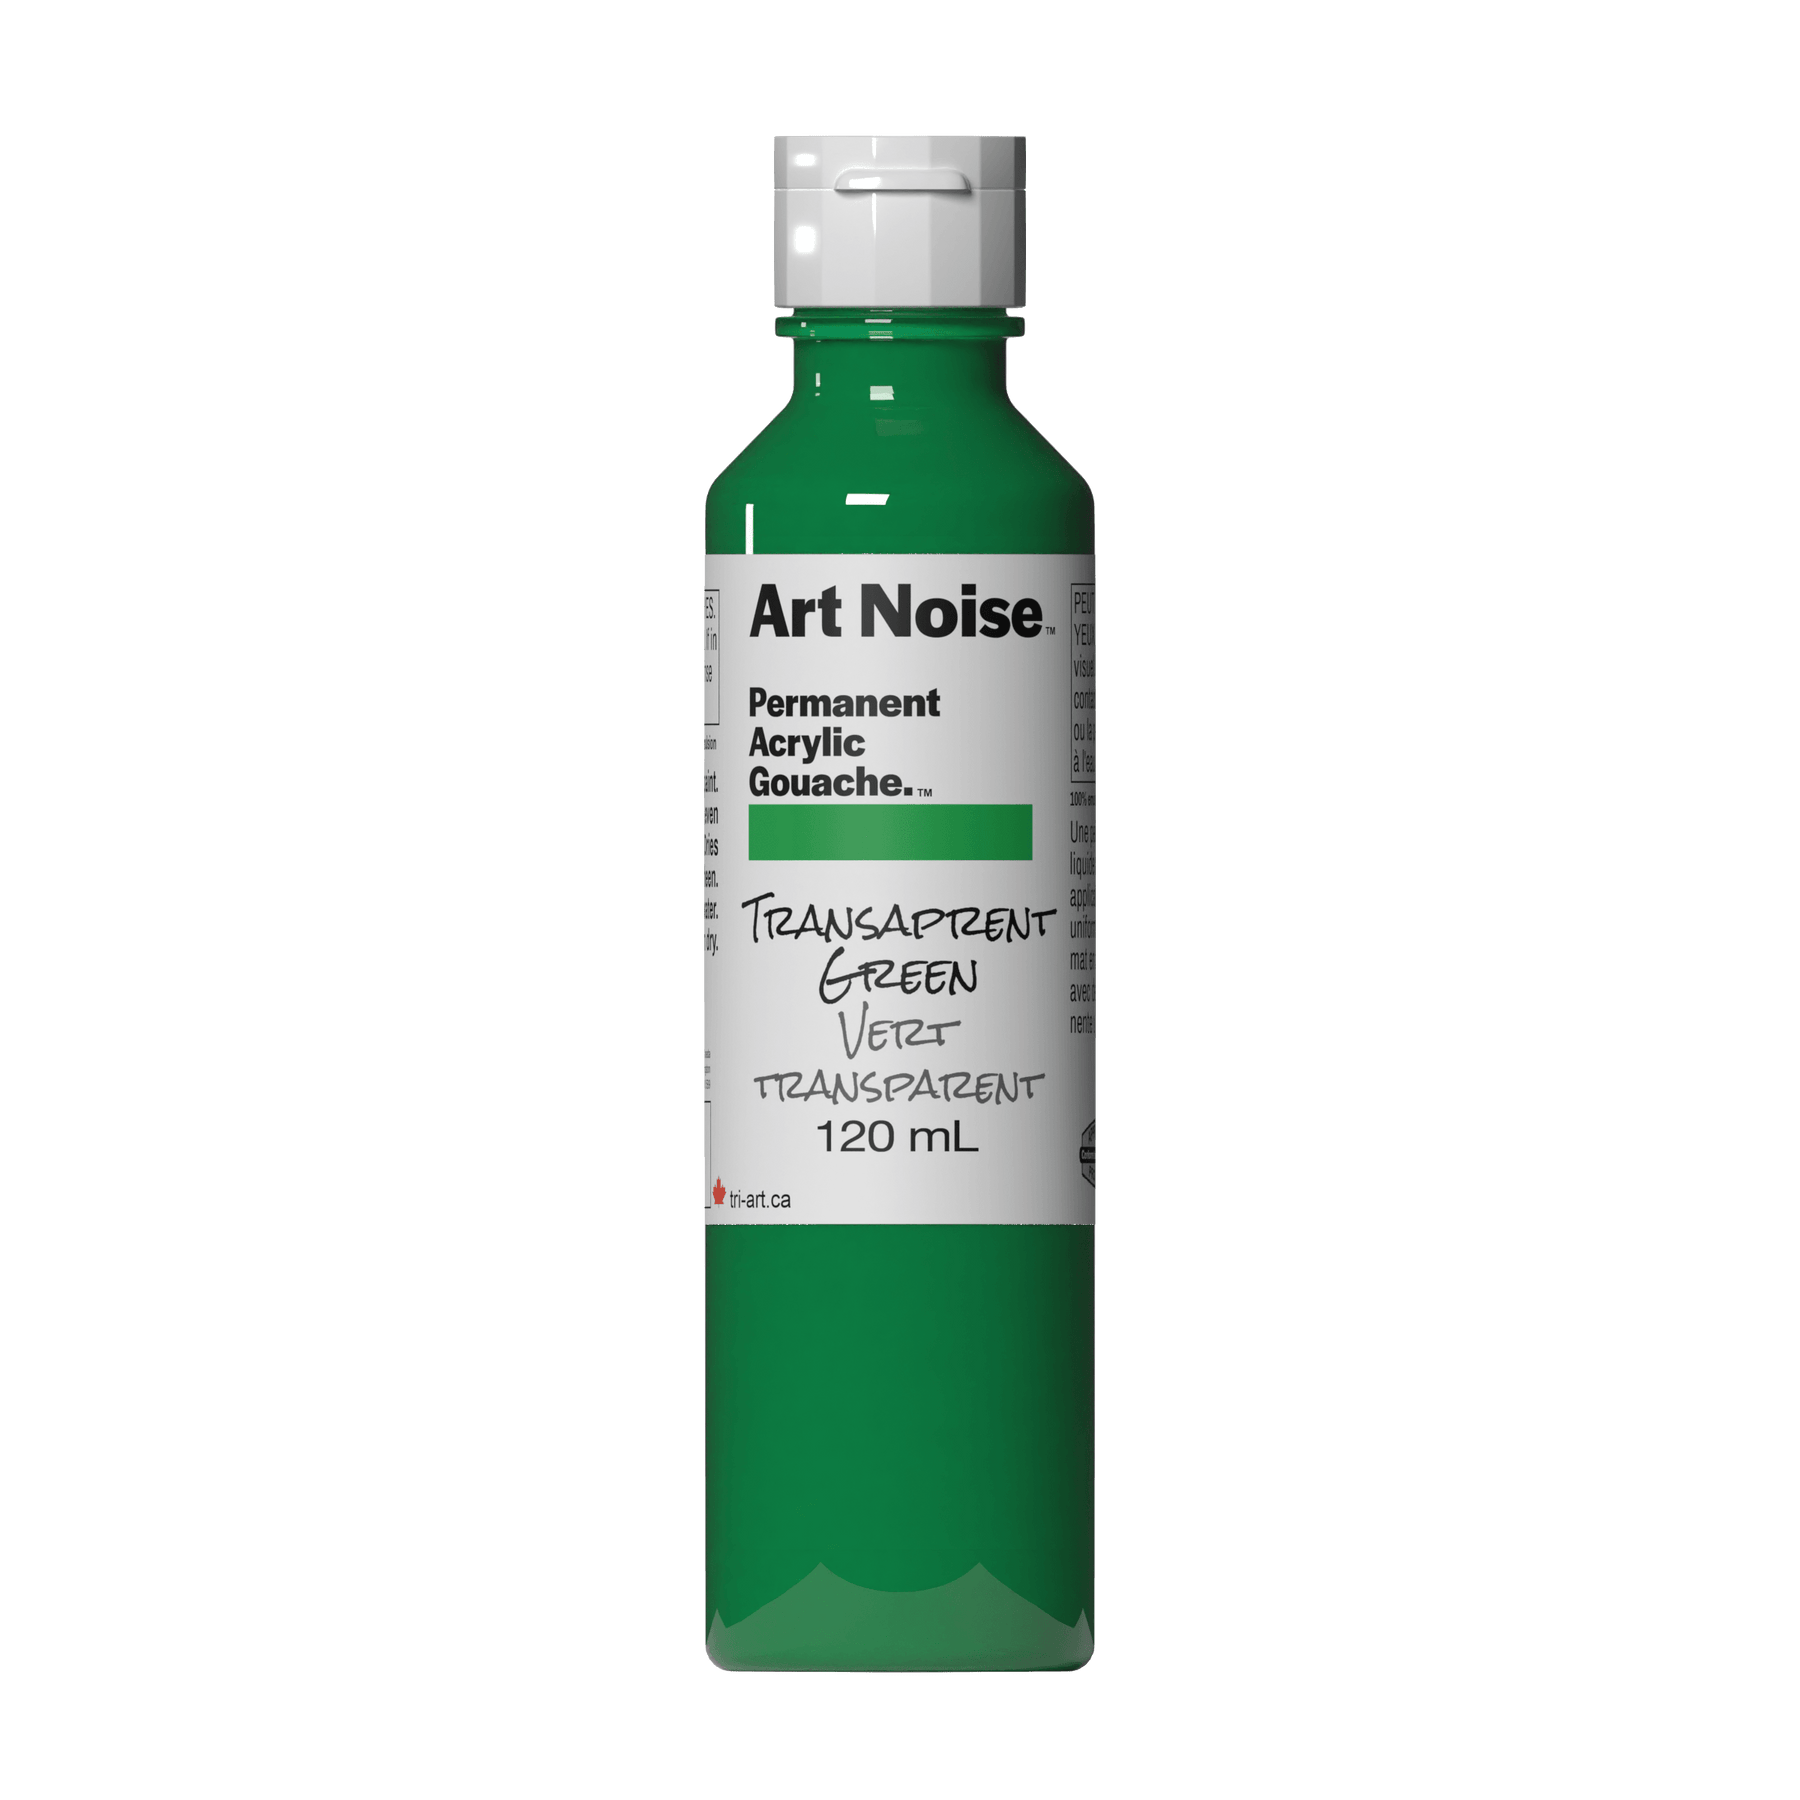 Art Noise - Transparent Green - Tri-Art Mfg.